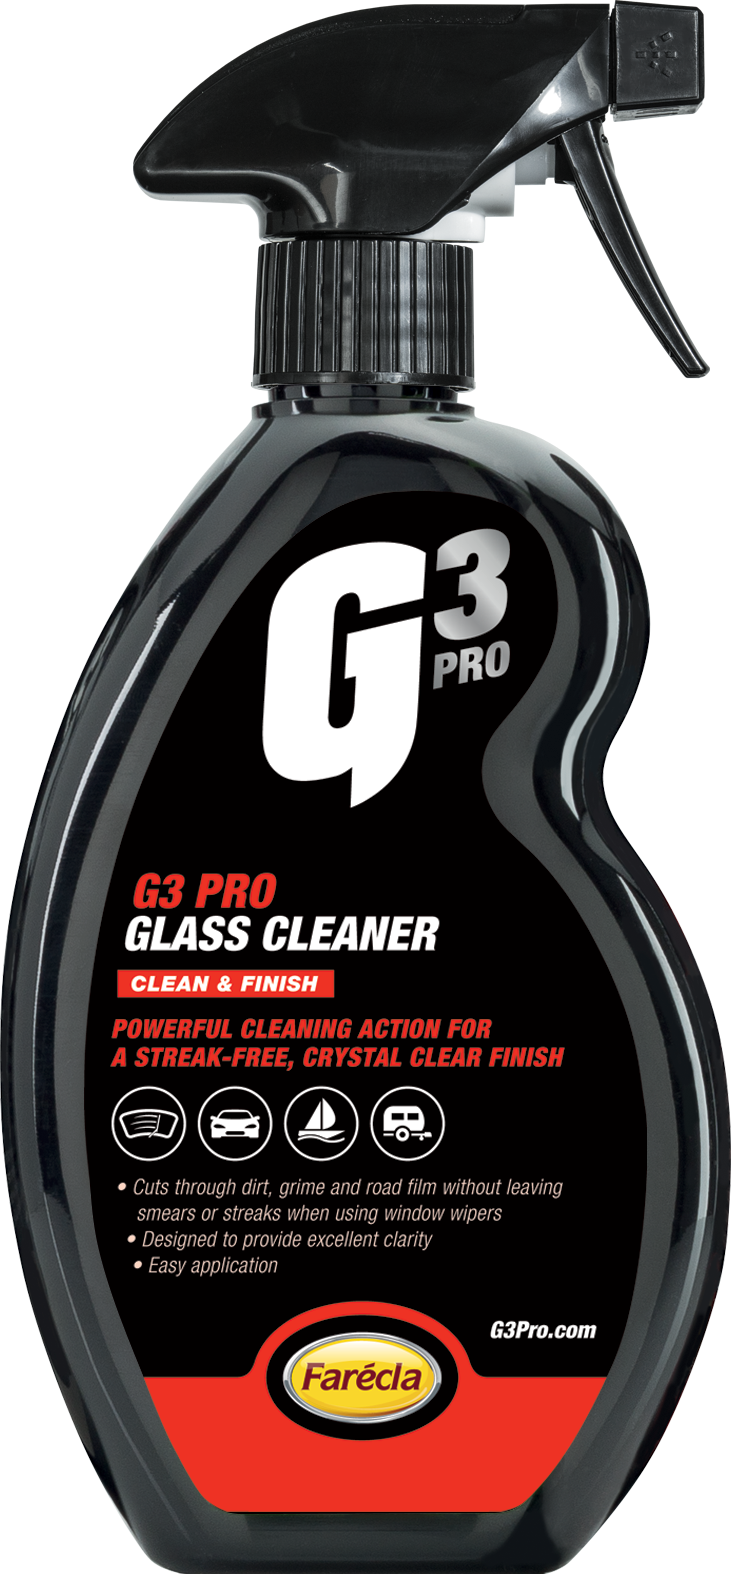 G3 Professional Glass Cleaner, Очиститель стекла, Farecla 7202